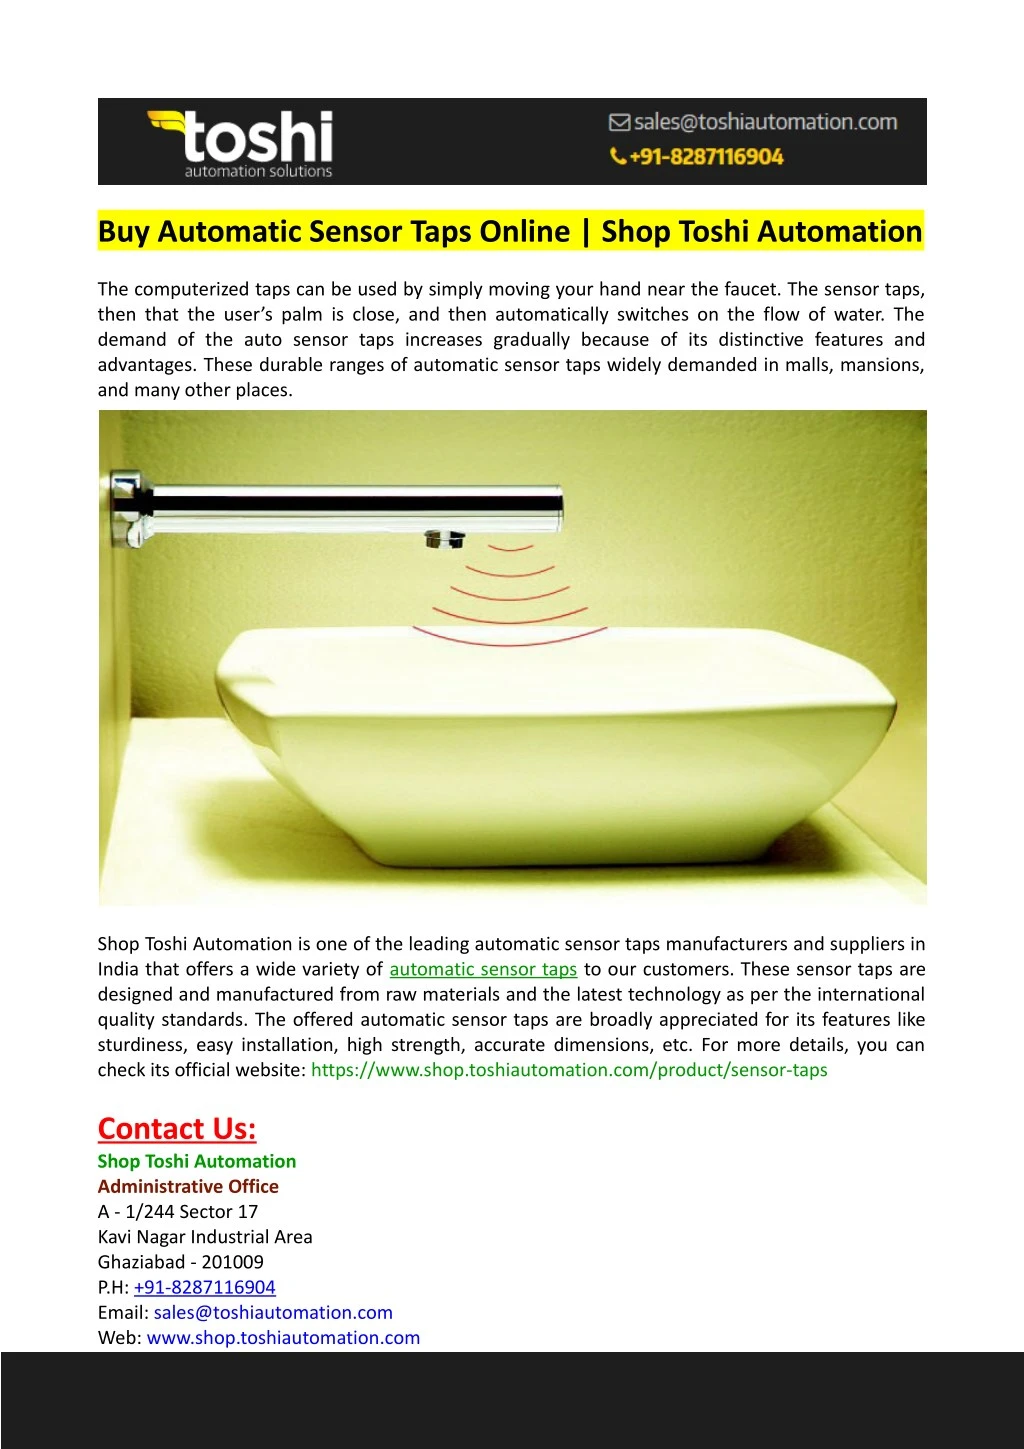 buy automatic sensor taps online shop toshi